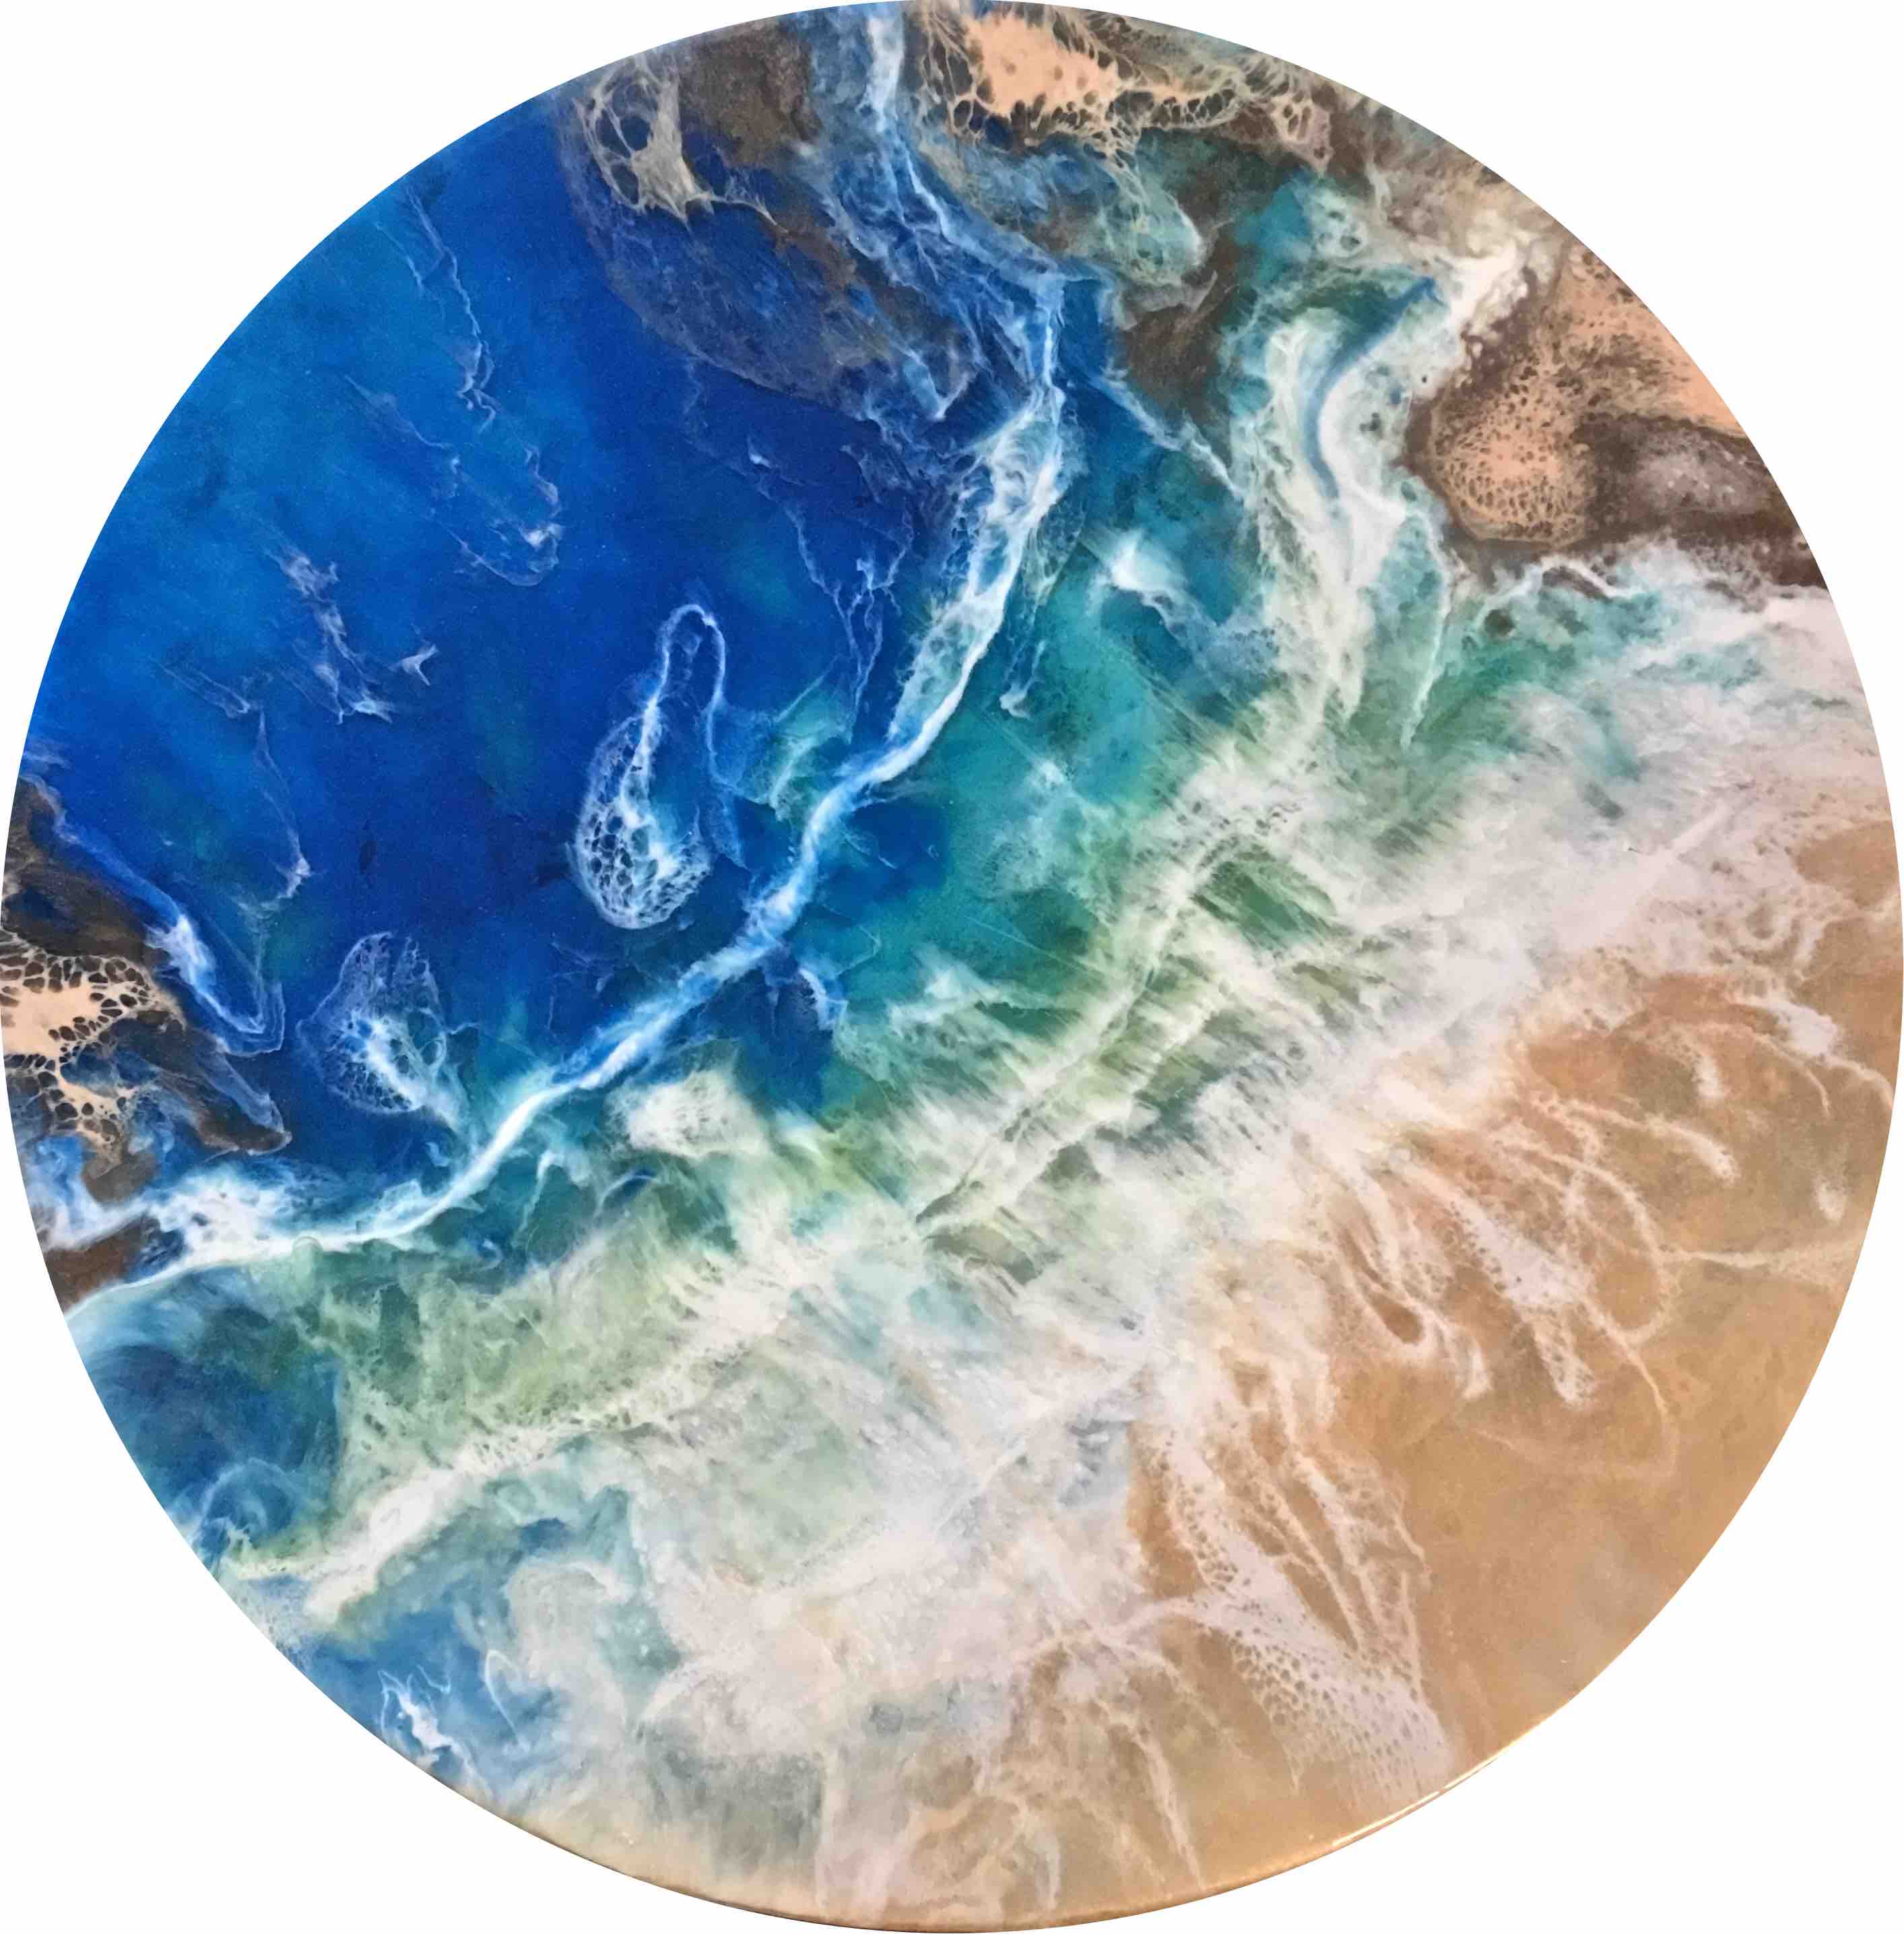 “Cove of Algarve” – Resin Pour Painting of Ocean Cove